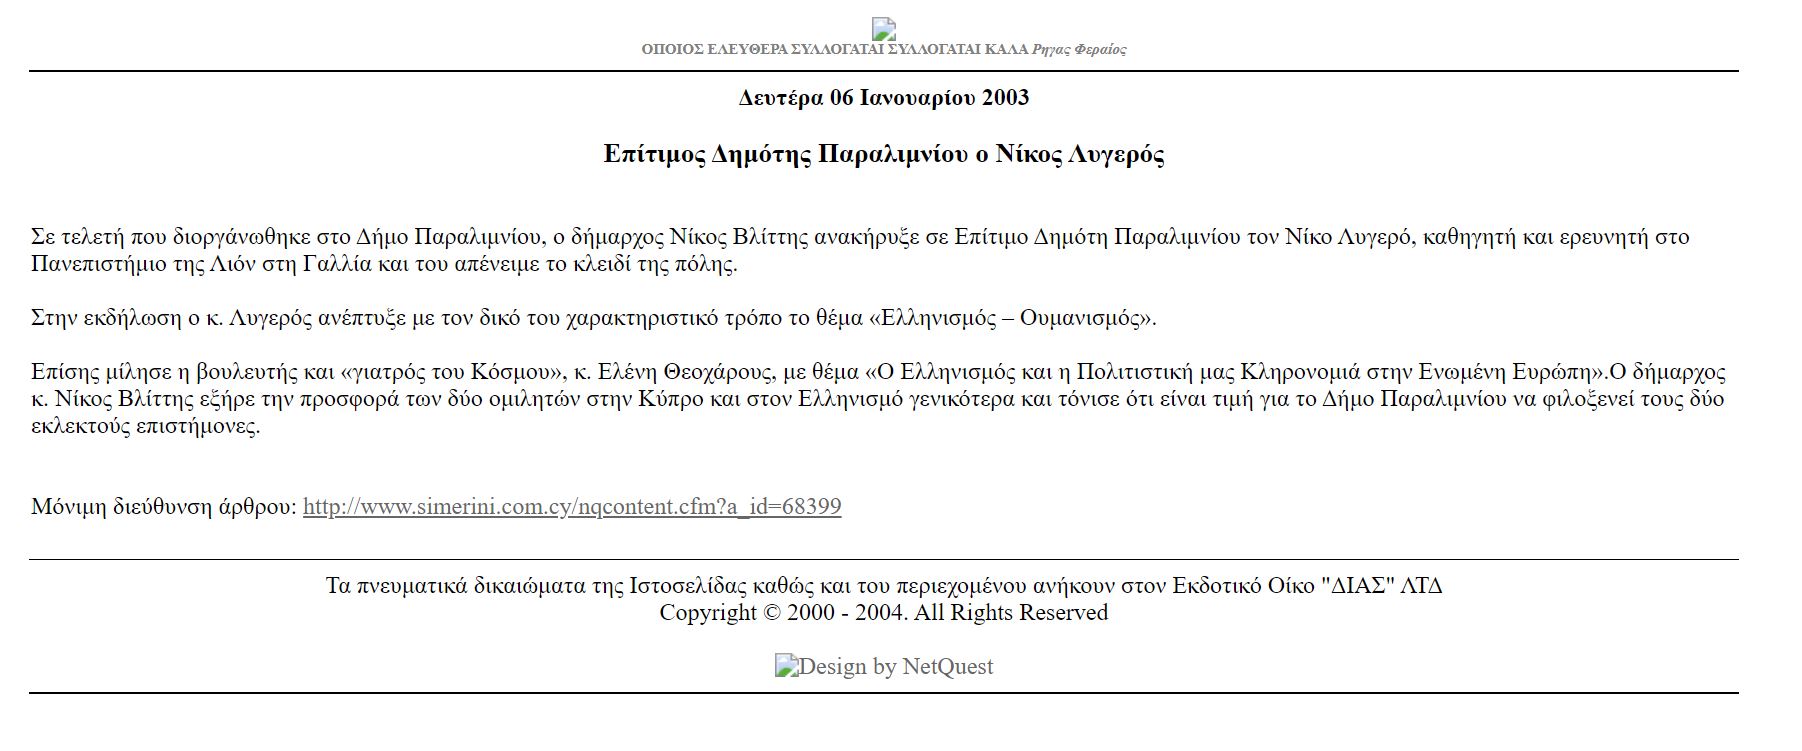 EΠITHMOΣ ΔHMOTHΣ ΠAPAΛIMNIOY O NIKOΣ ΛYΓEPOΣ. H ΣHMEPINH 06/01/2003.